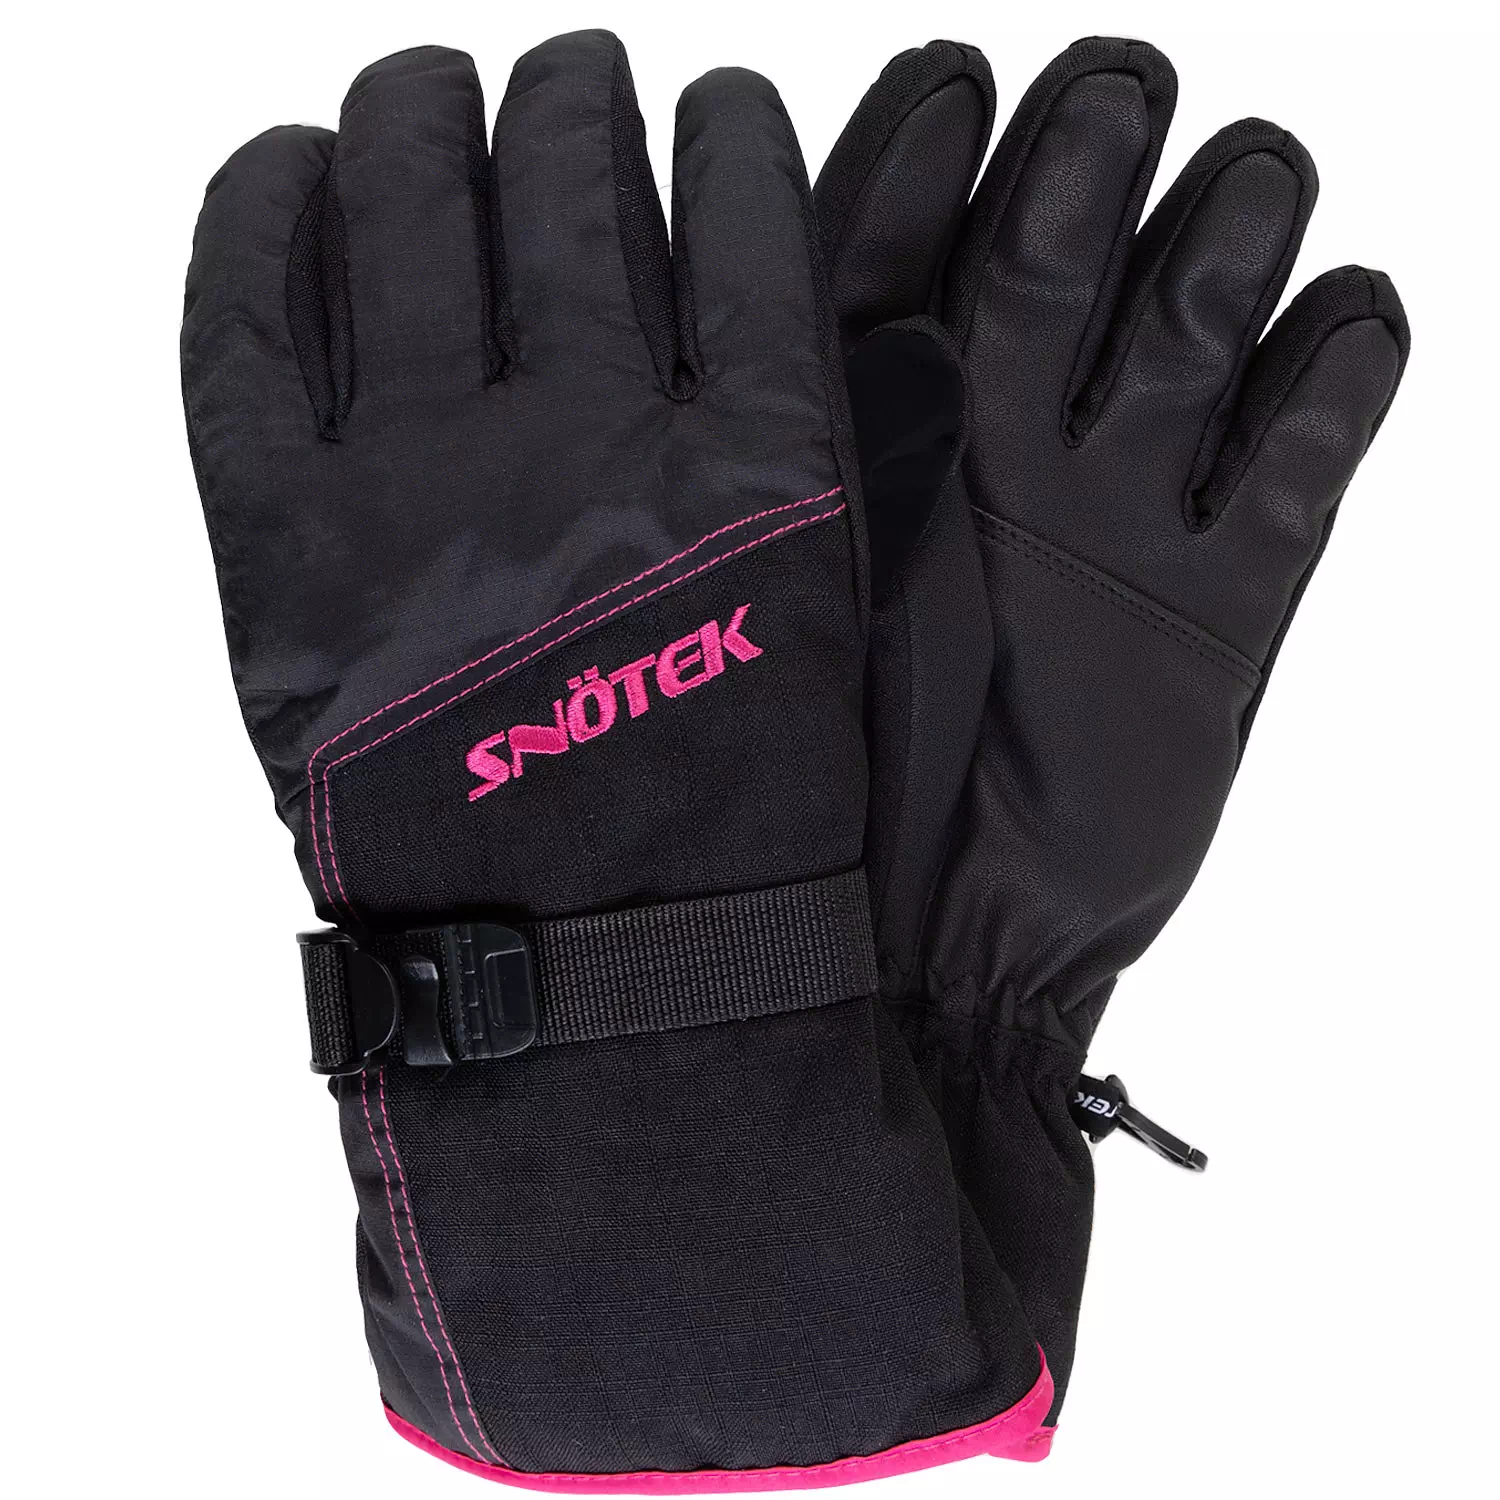 Snötek - Winter ski gloves with wrist leash, large (L)